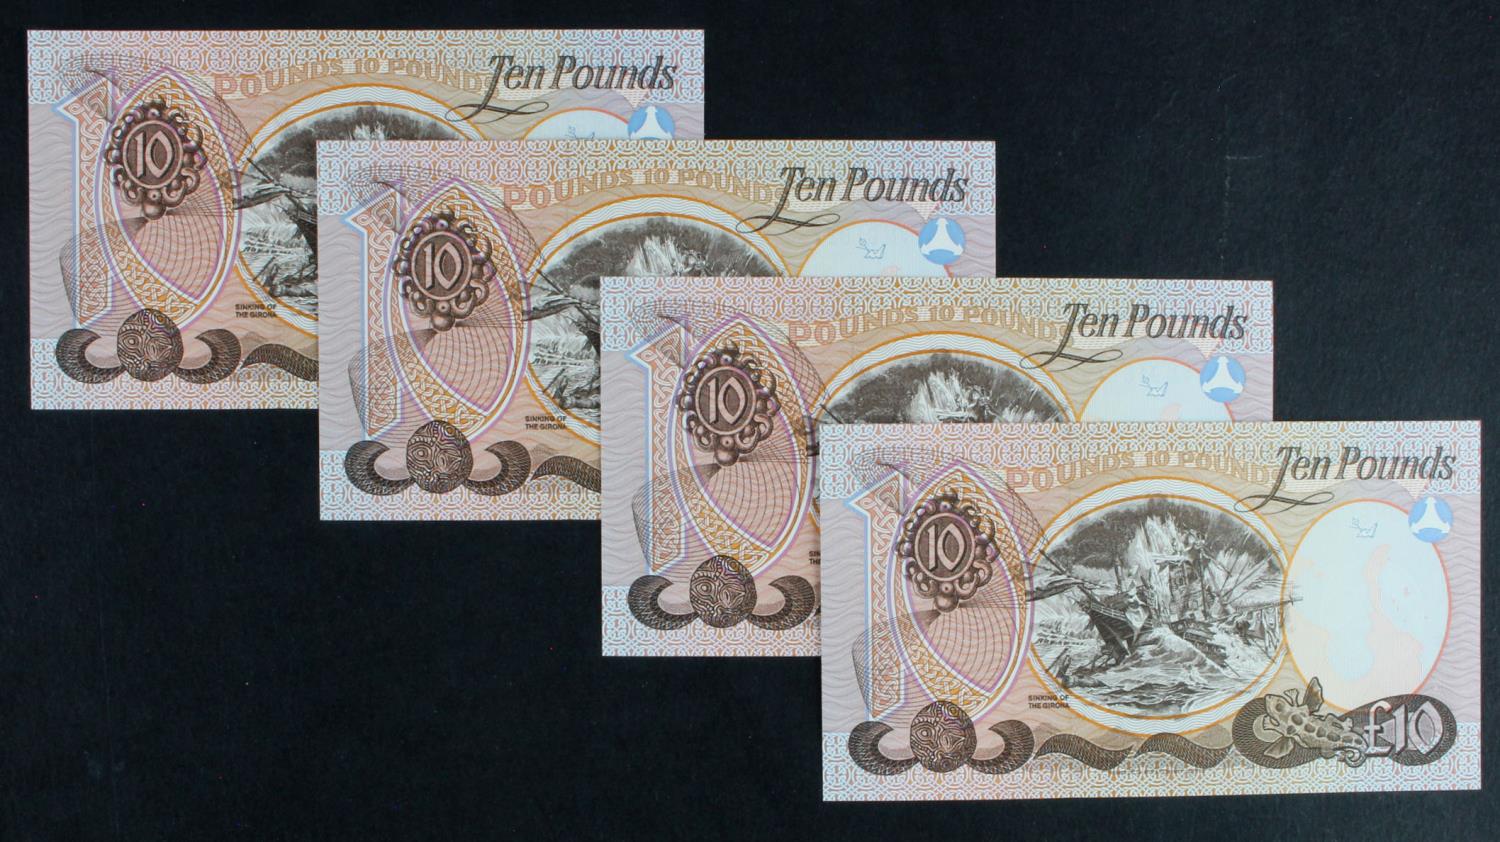 Northern Ireland, Allied Irish Banks 10 Pounds (4) dated 1st June 1988 signed G.B. Scanlon, a - Image 2 of 2